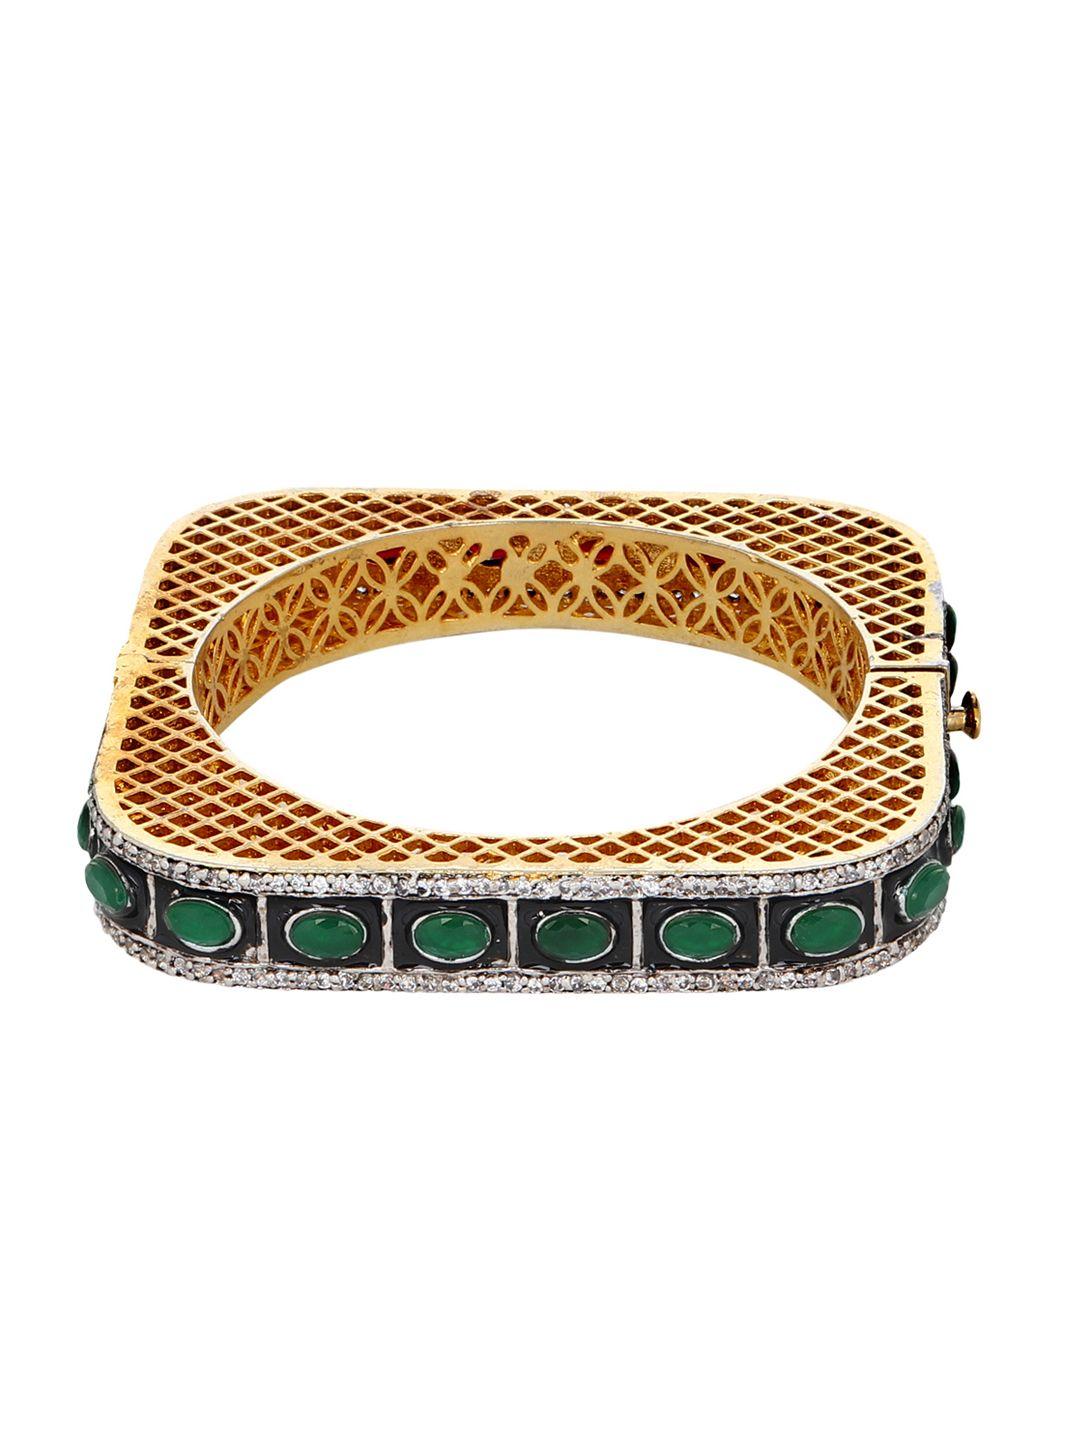 adwitiya collection gold-plated antique kada bracelet